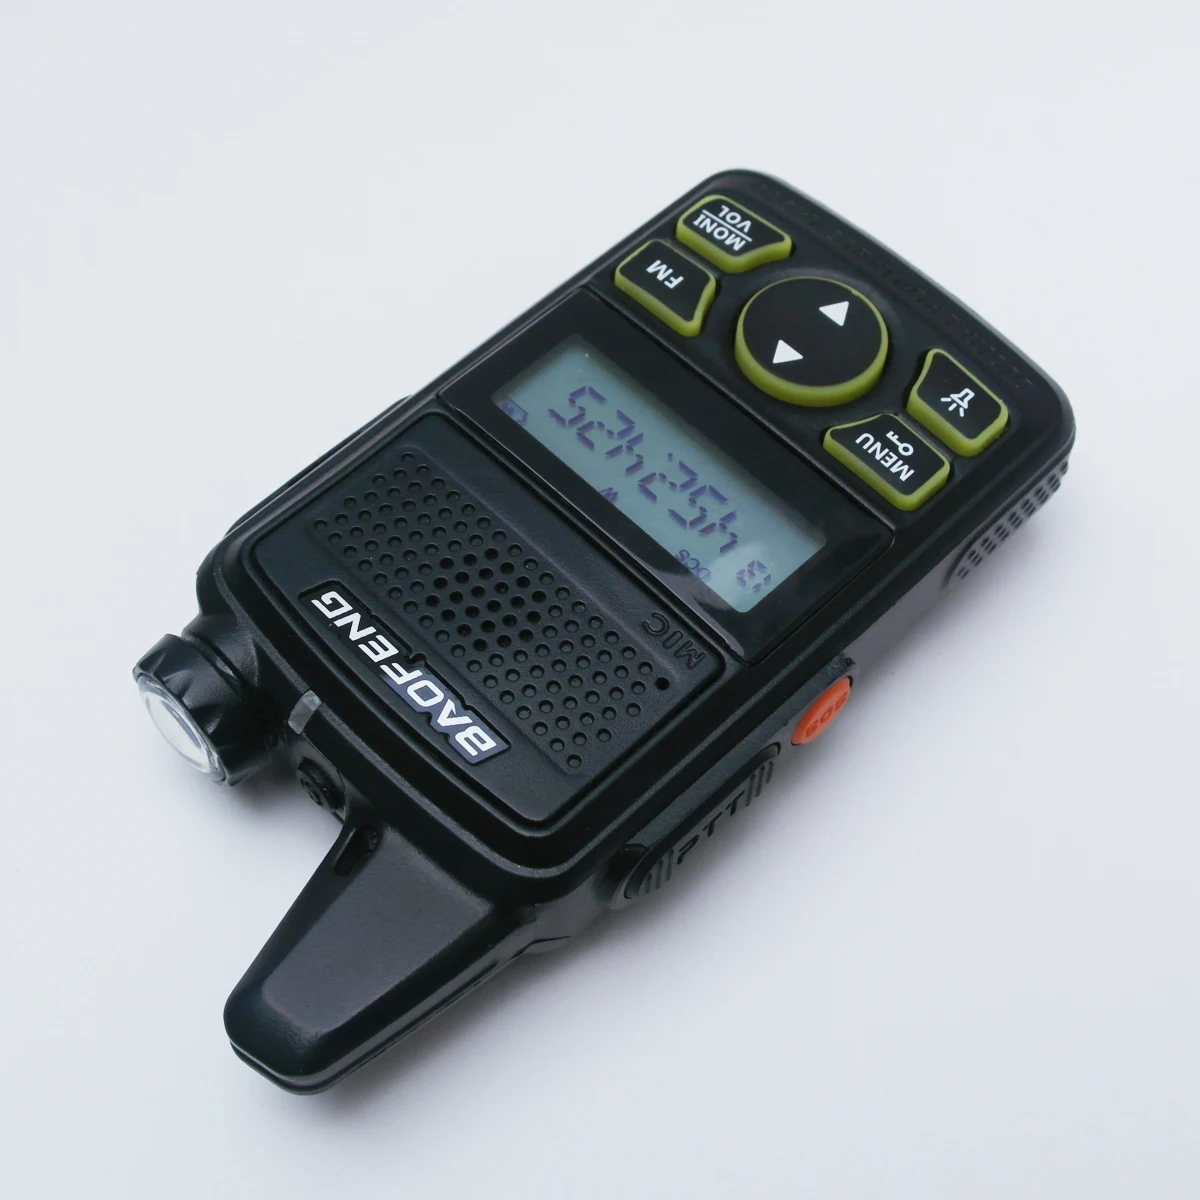 2Pcs Baofeng BF T1 Mini Walkie Talkie Ham radio comunicador Two way radios Portable Profesional Stations Transceiver Talki Walki enlarge